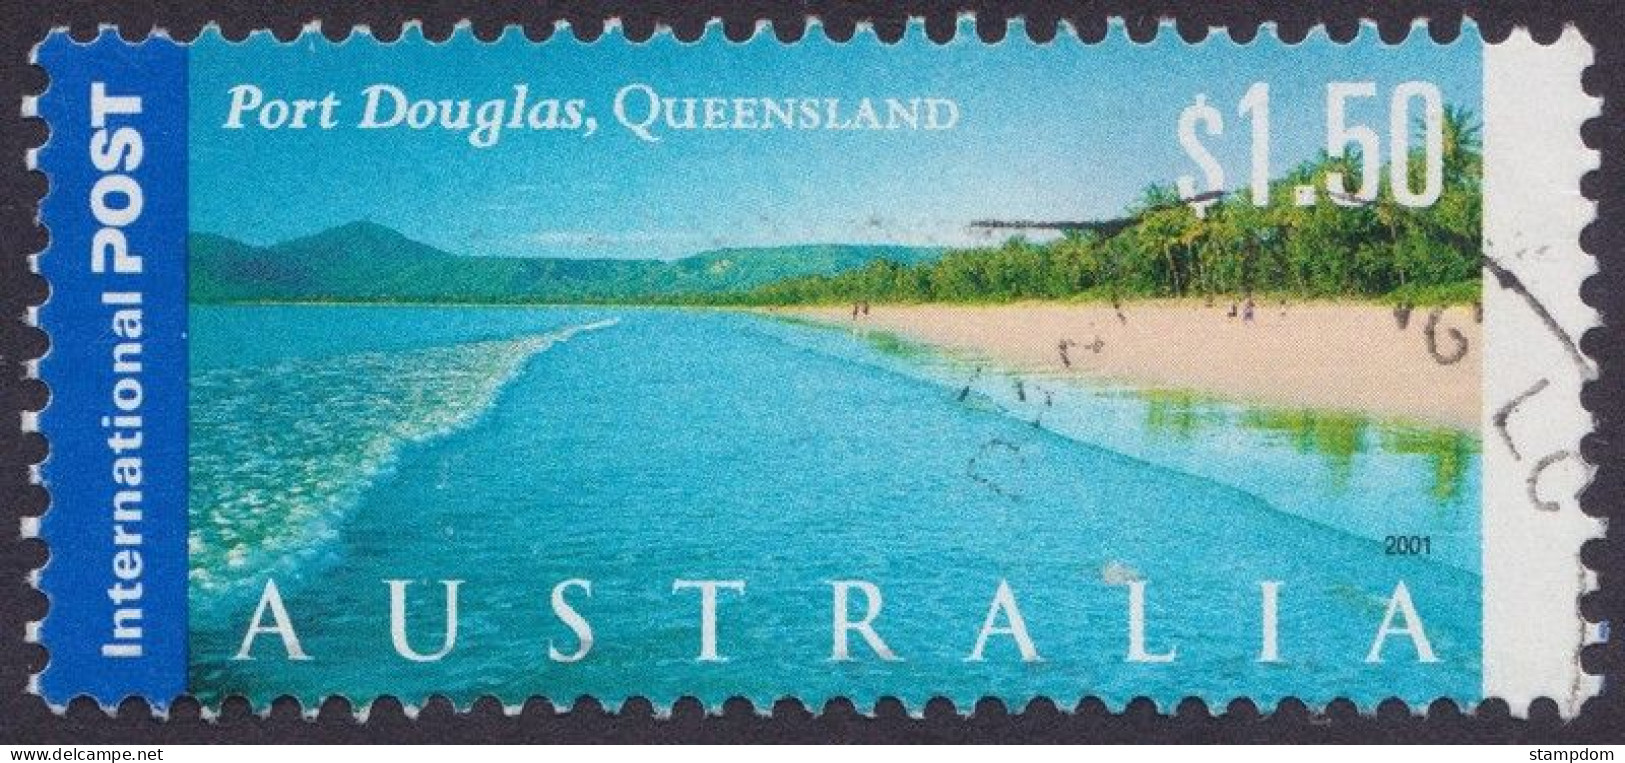 AUSTRALIA 2001 Tourist Attractions $1.50 Port Douglas Sc#1981 USED @O383 - Usados